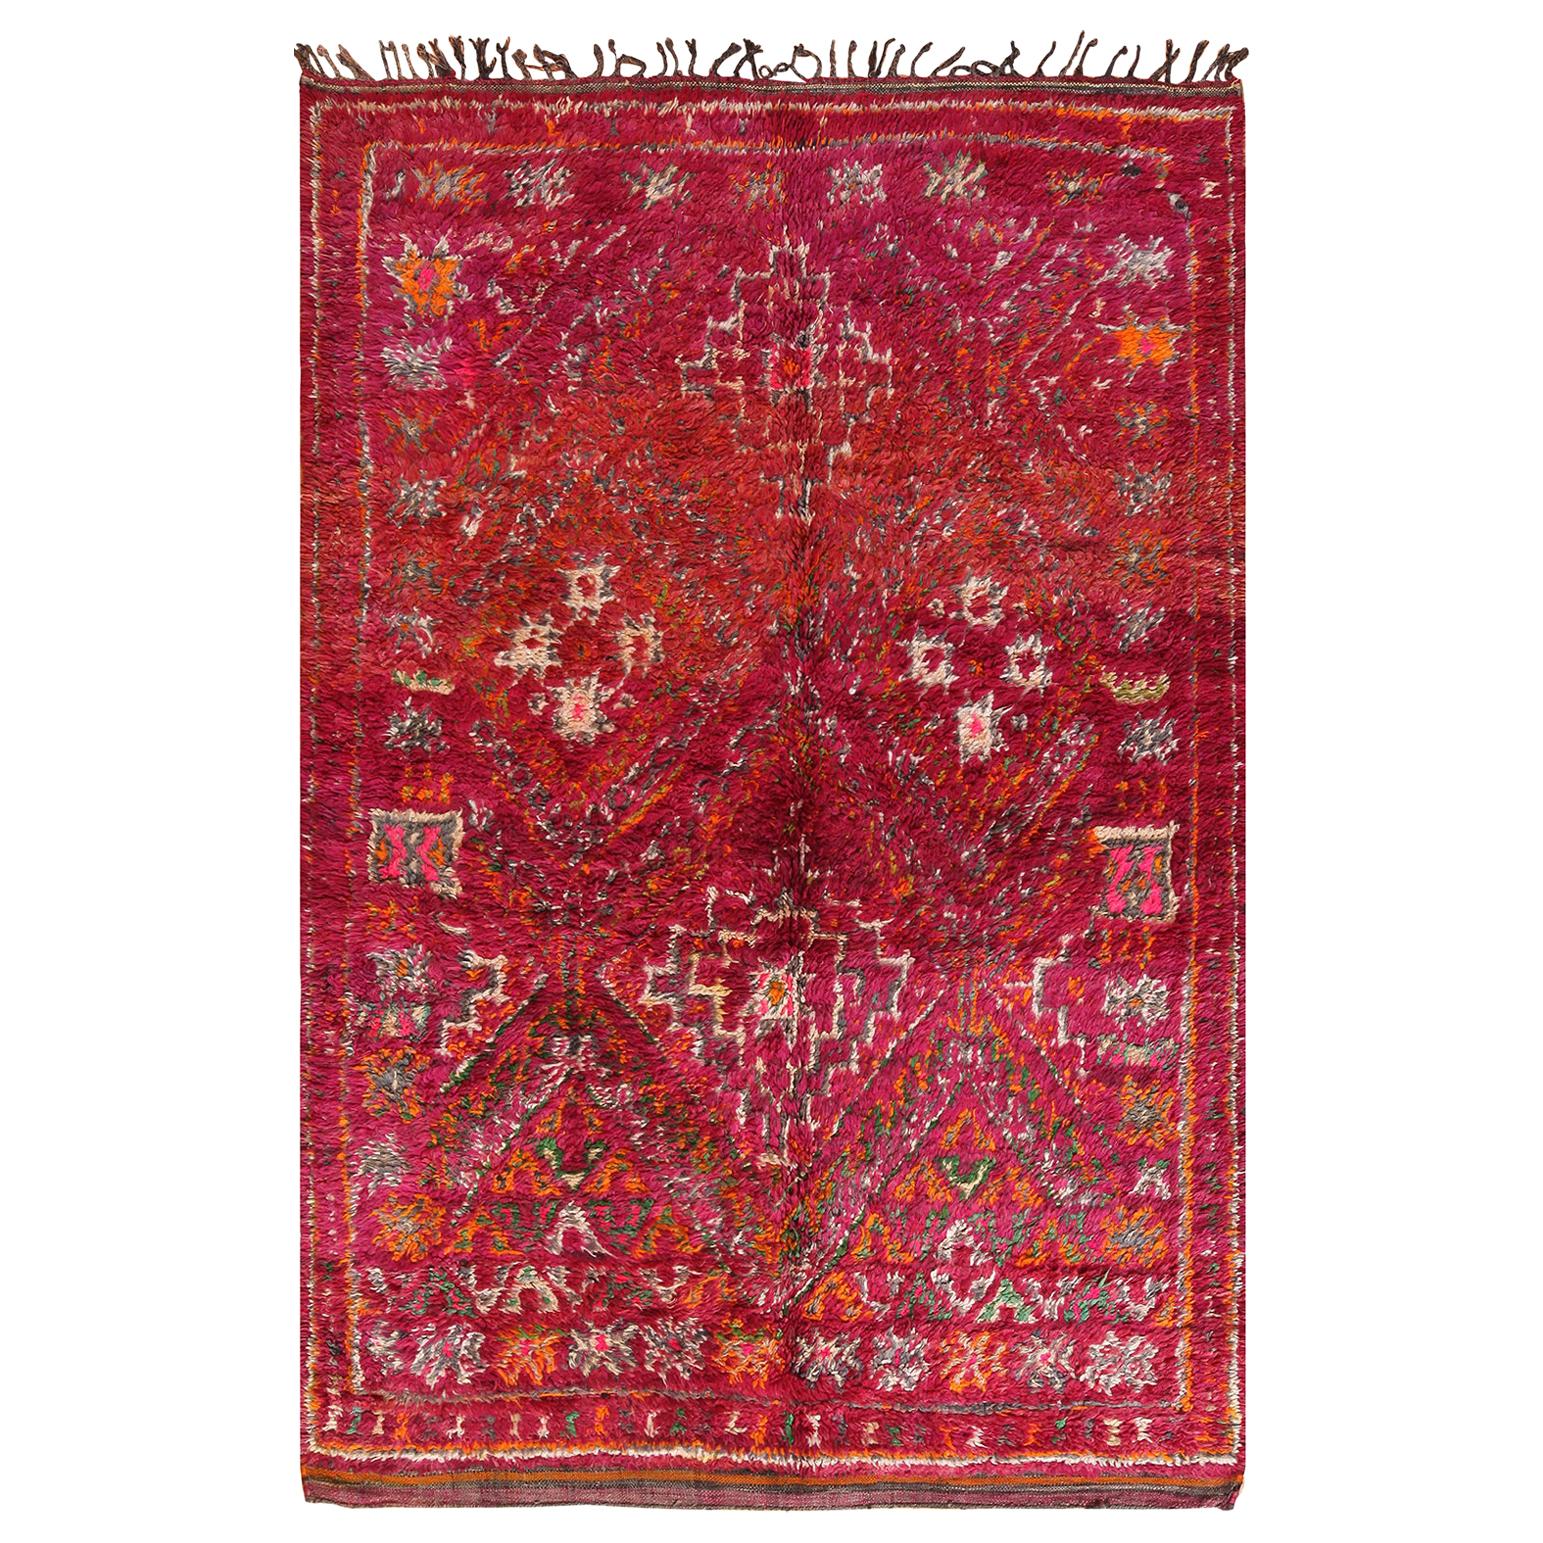 Geometric Folk Art Vintage Moroccan Rug. Size: 5 ft 7 in x 8 ft 8 in